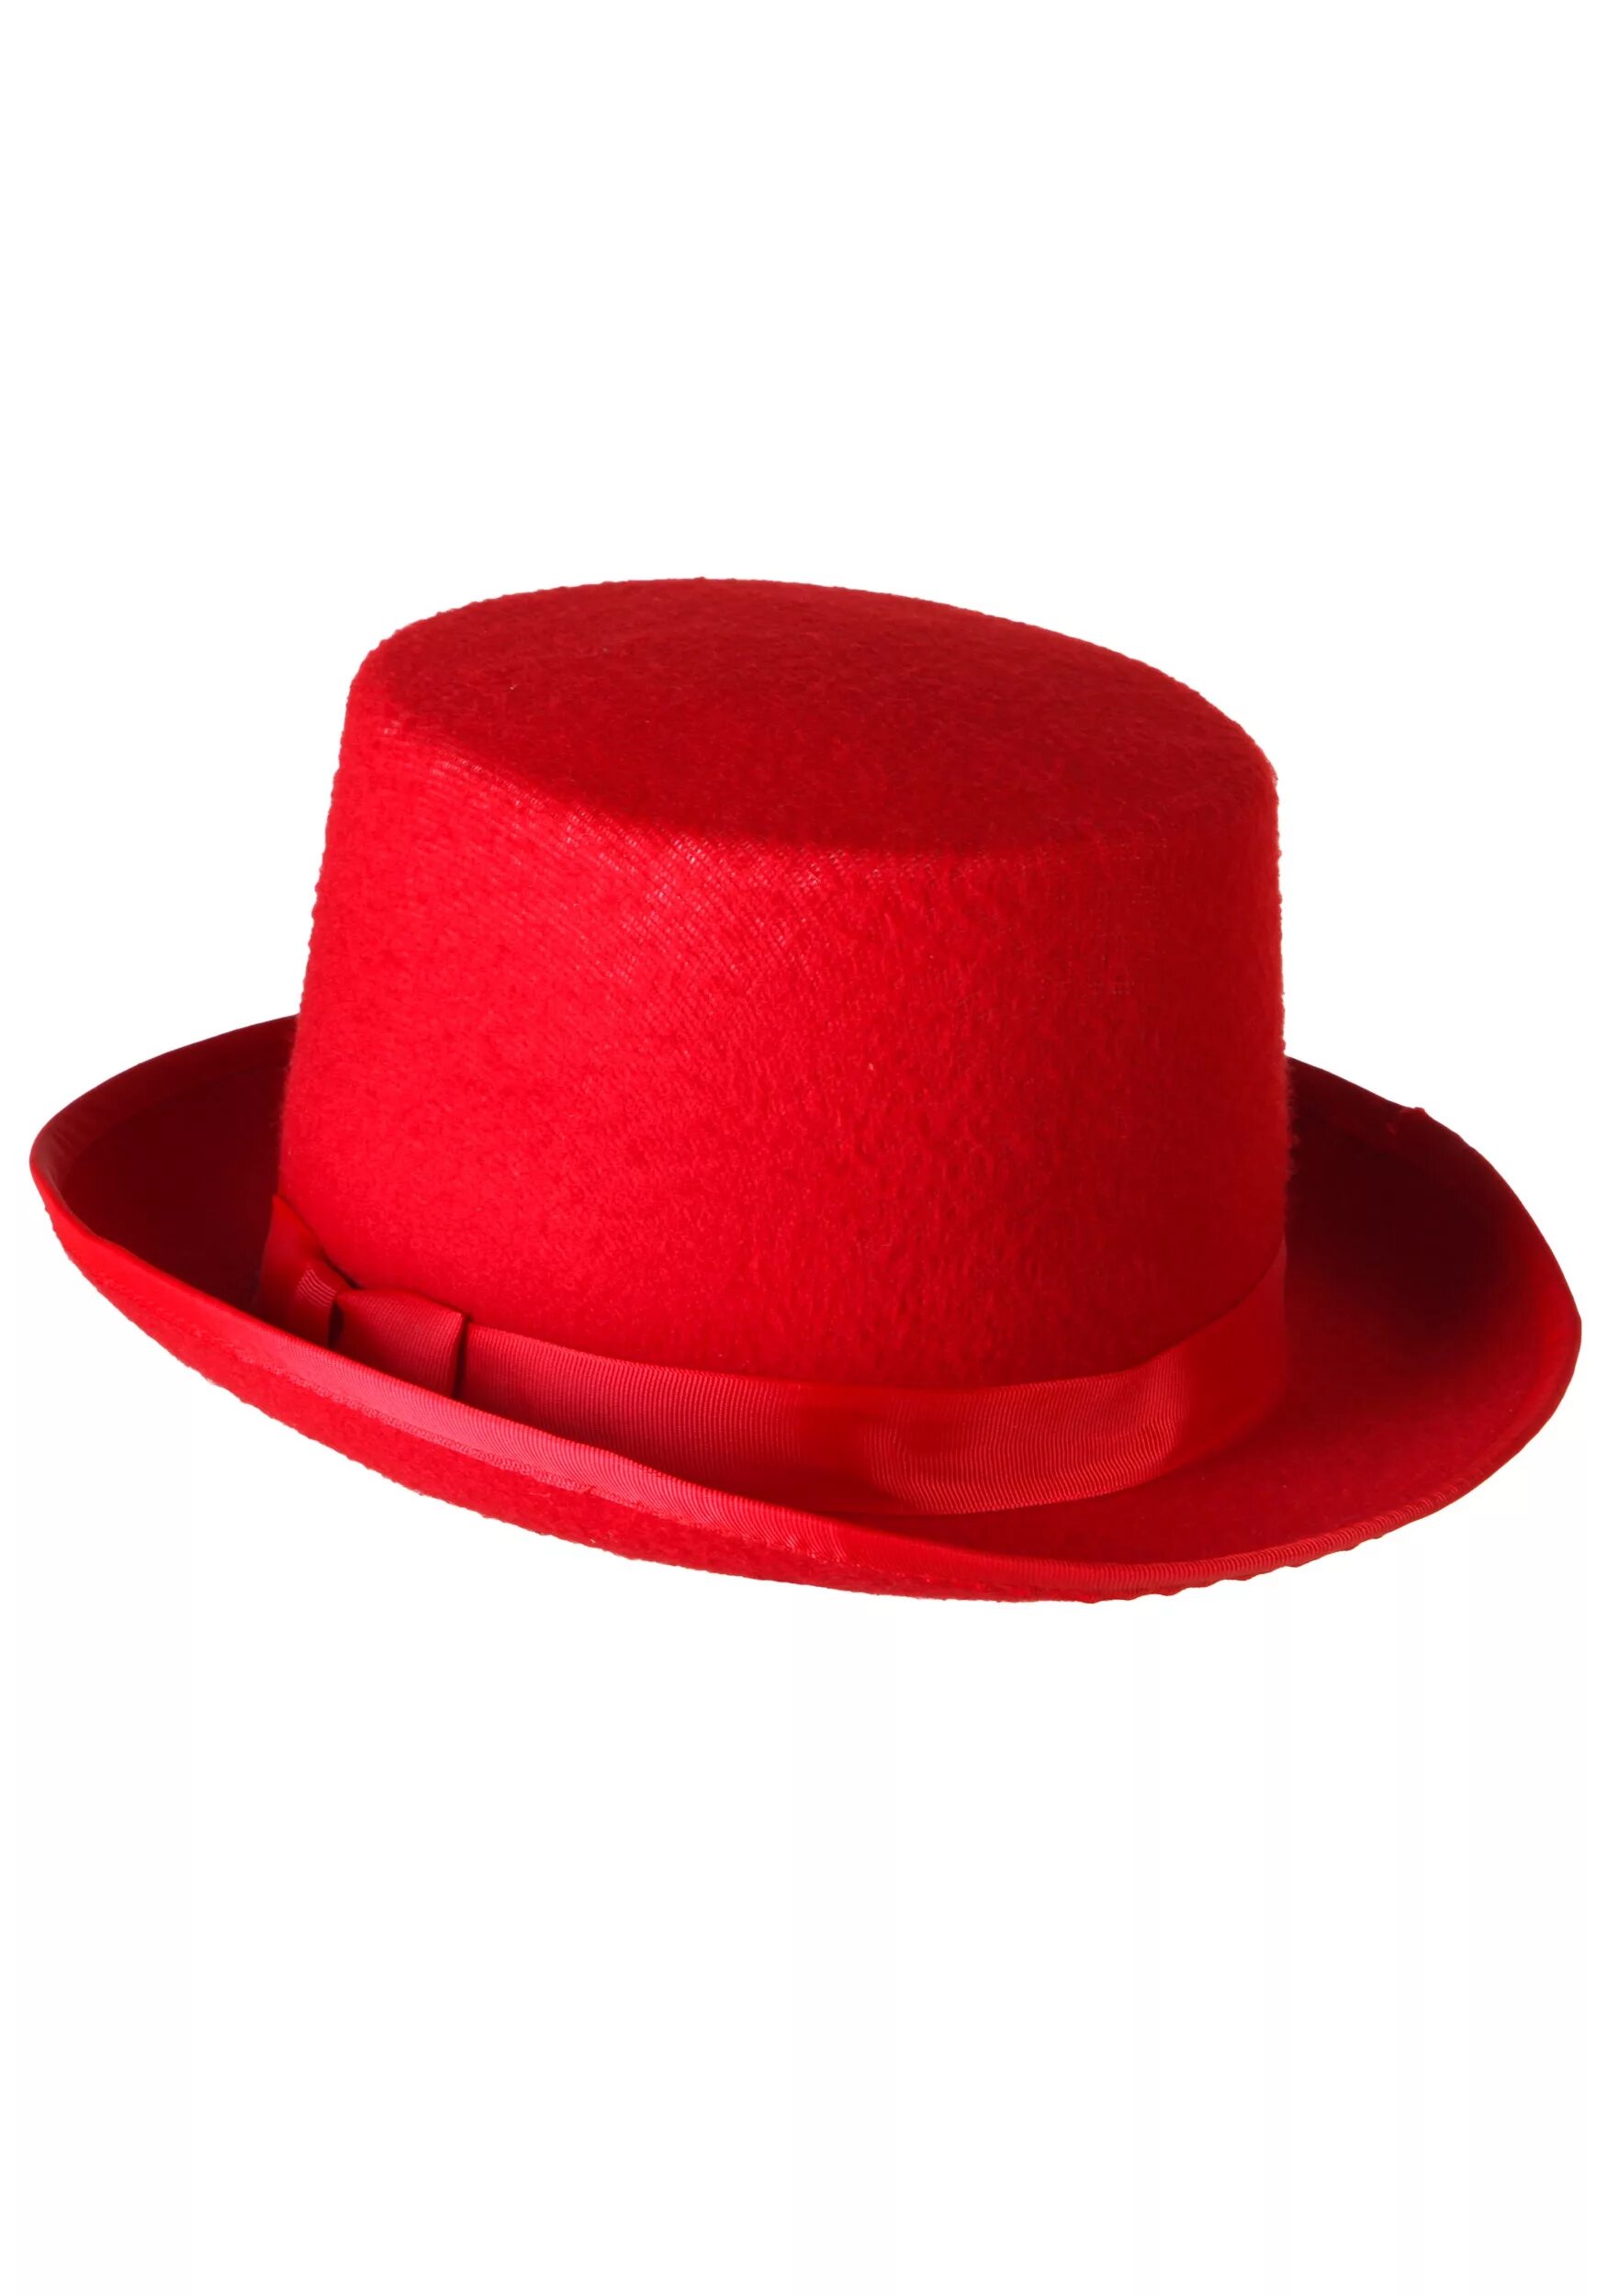 Jeder hat. Шляпа красная. Шляпа цвет: красный. Шляпа Red hat. Шляпа на белом фоне.